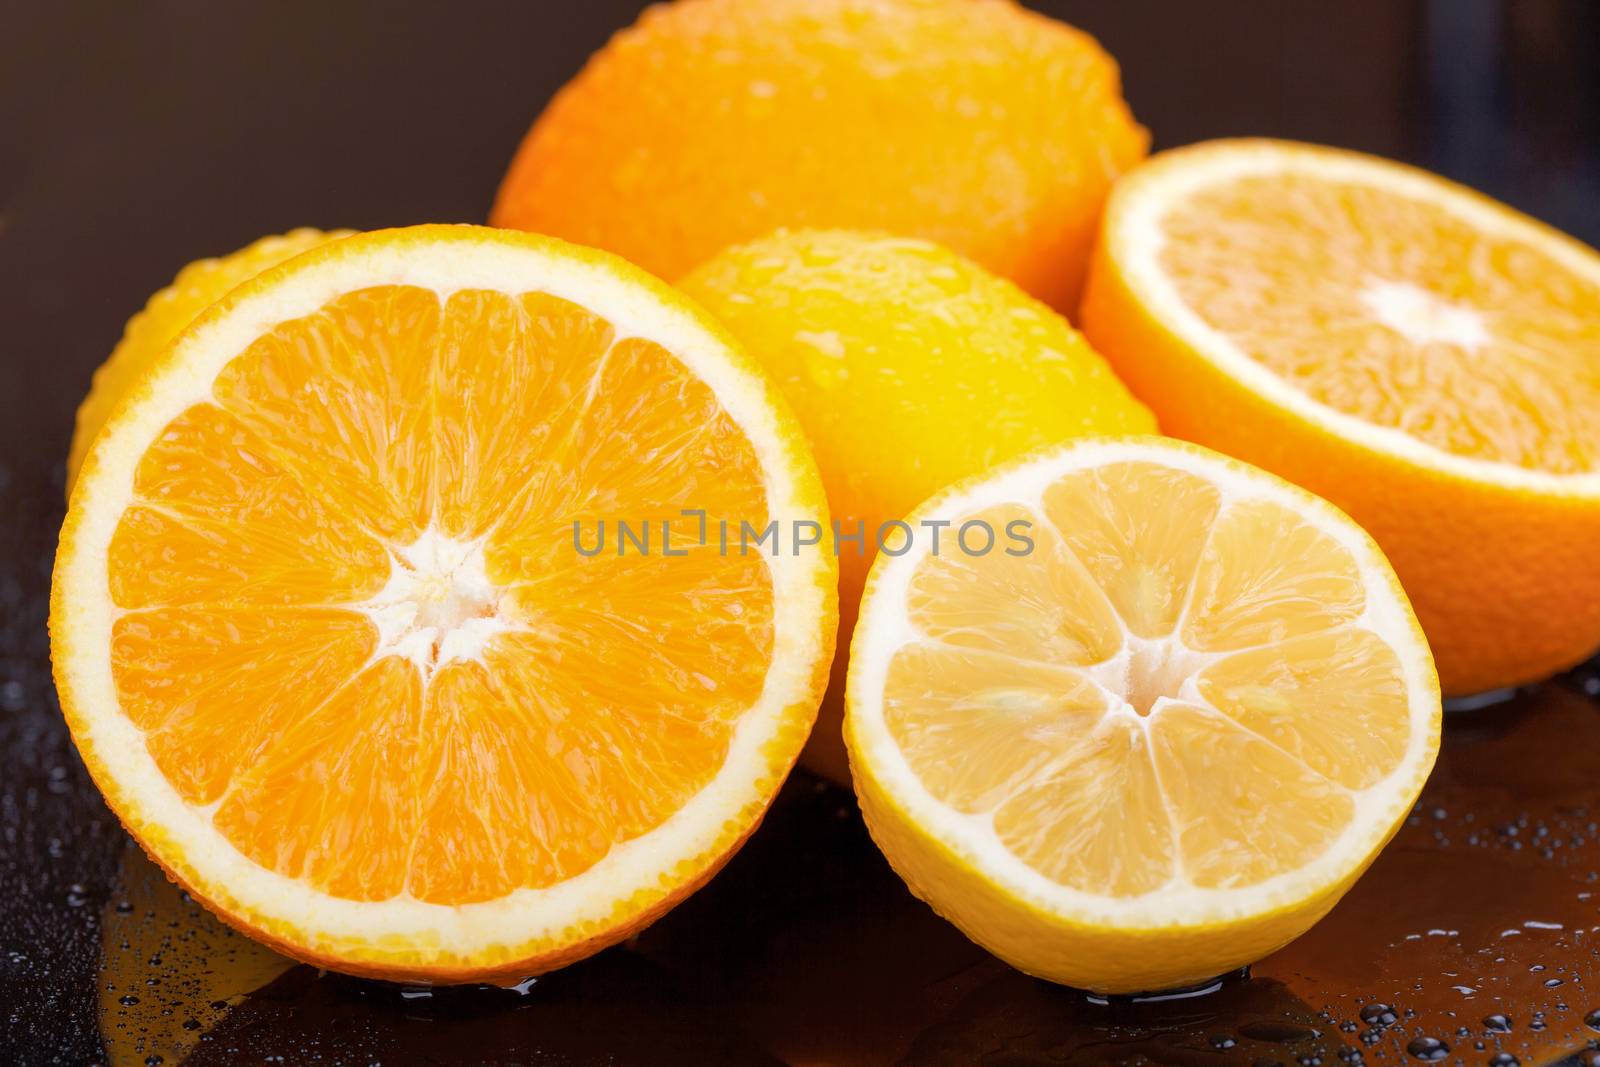 Delicious Citrus Fruits by MilanMarkovic78